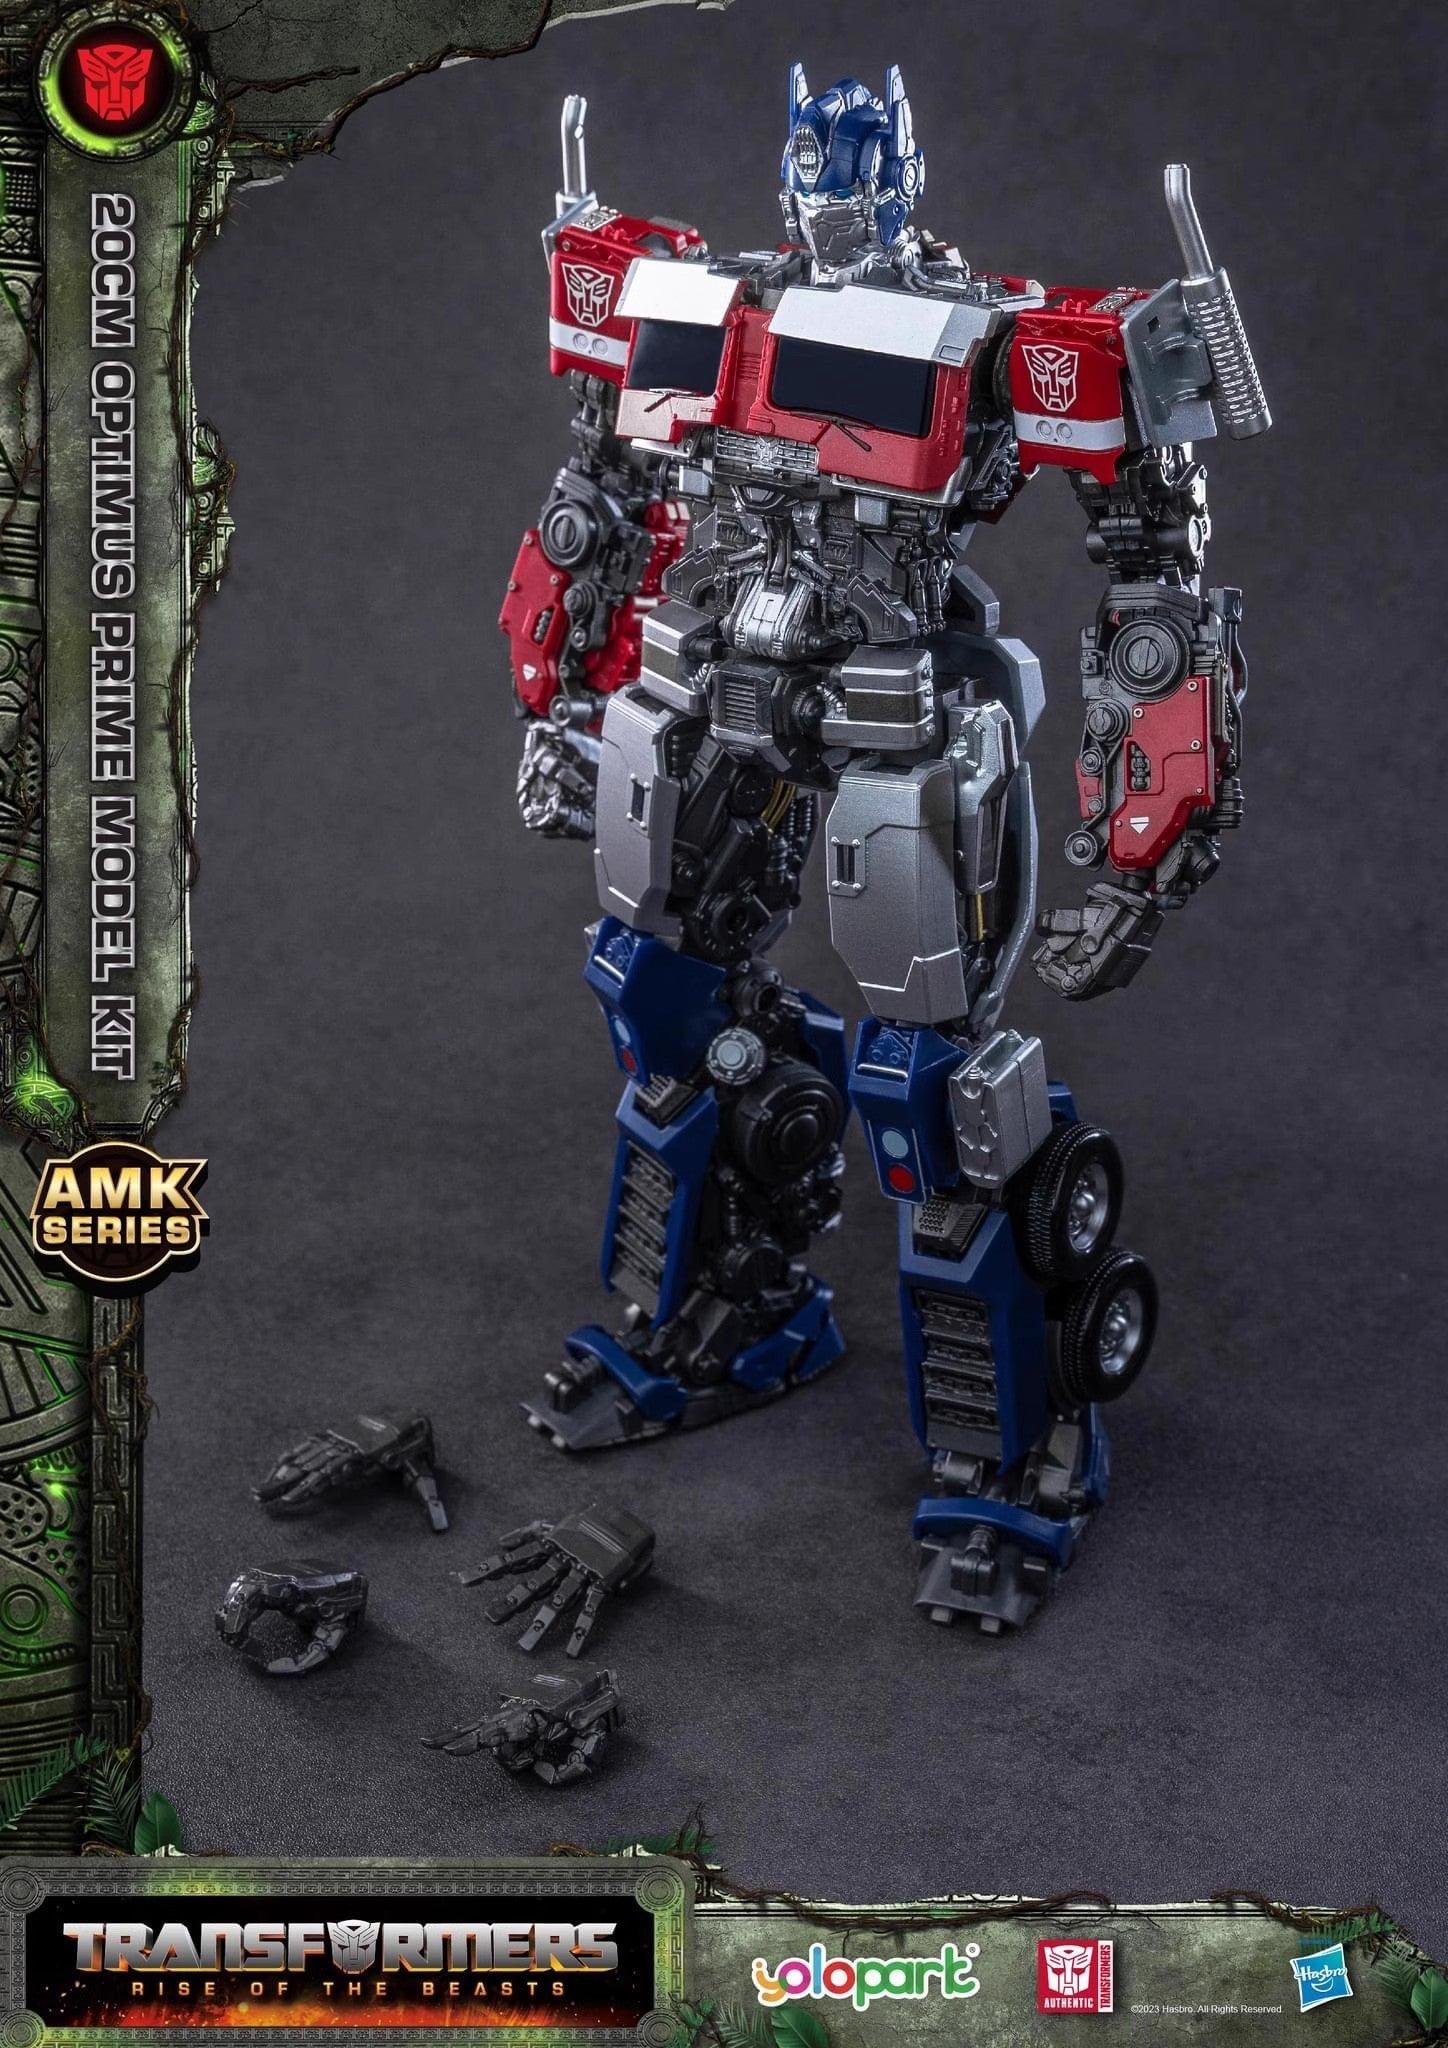 Yolopark - Transformers Optimus Prime AMK Series Model Kit